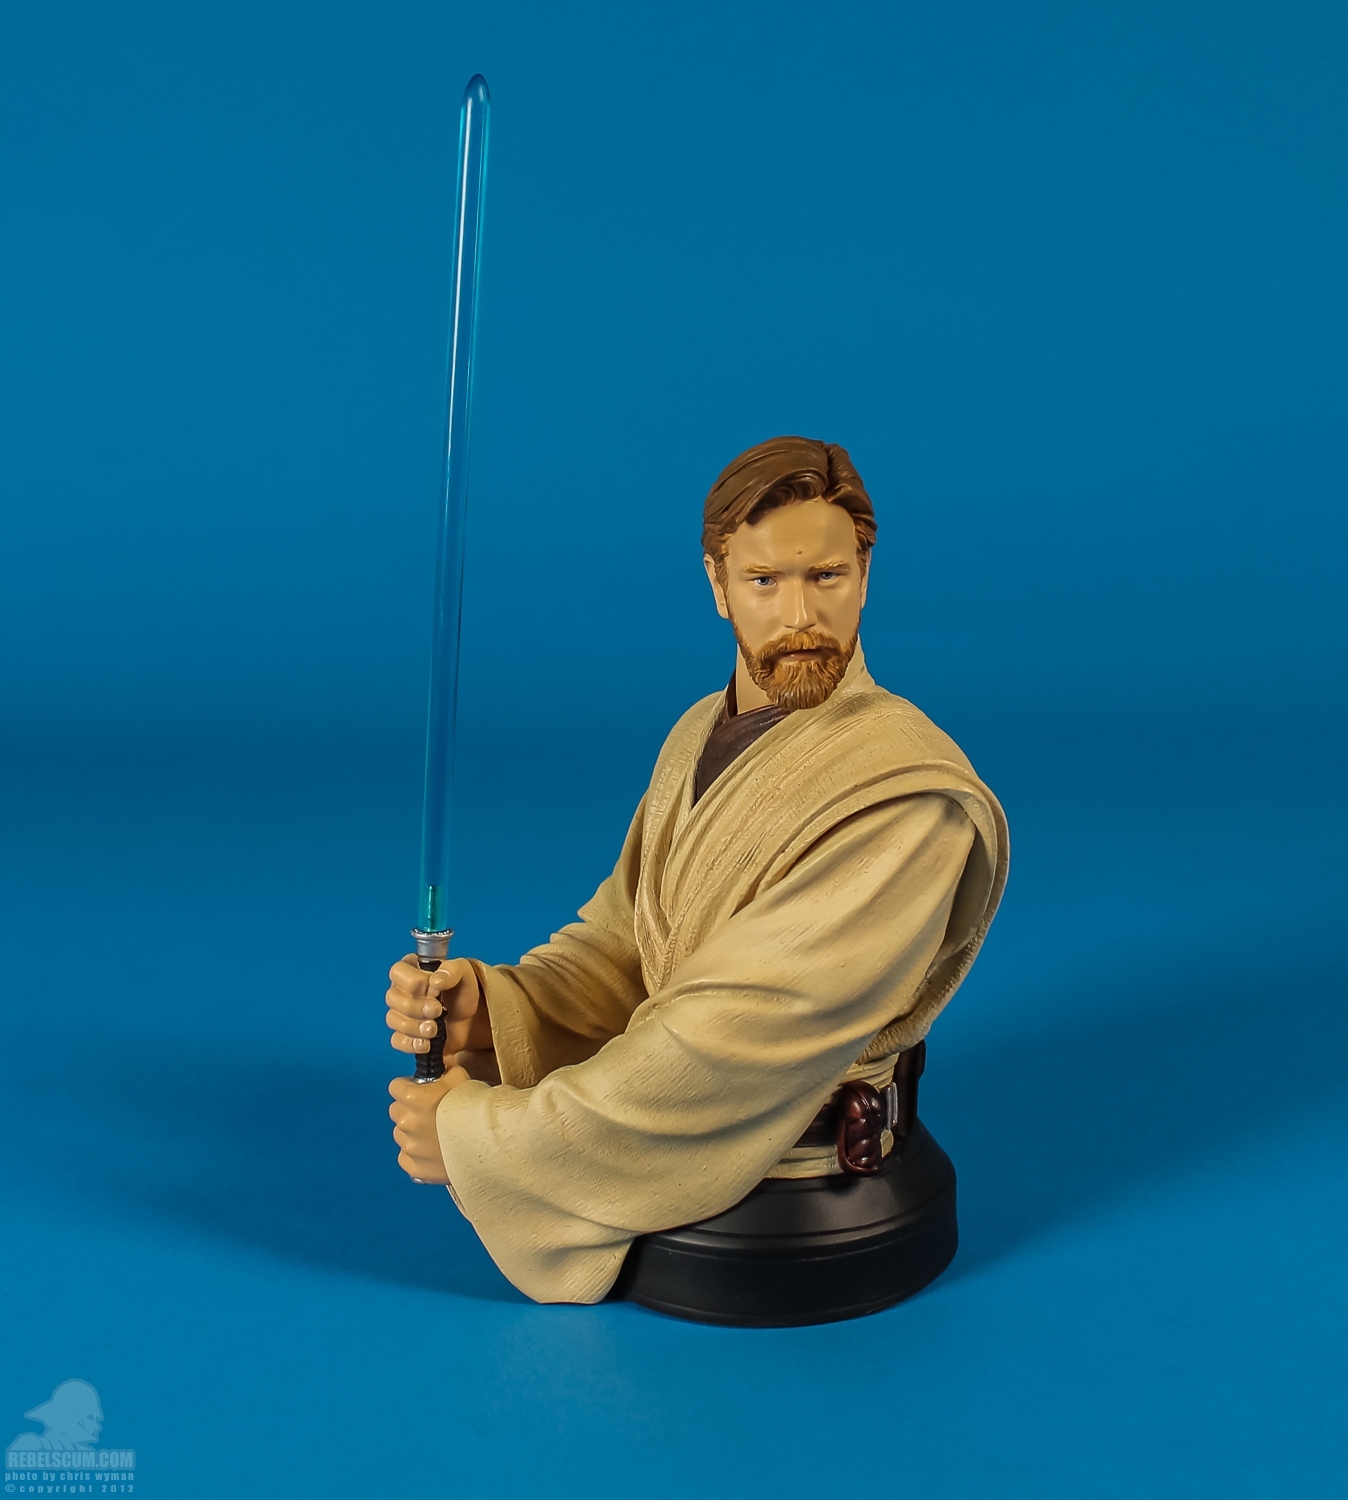 Obi-Wan_Kenobi_ROTS_Exclusive_Mini_Bust_Gentle_Giant-01.jpg